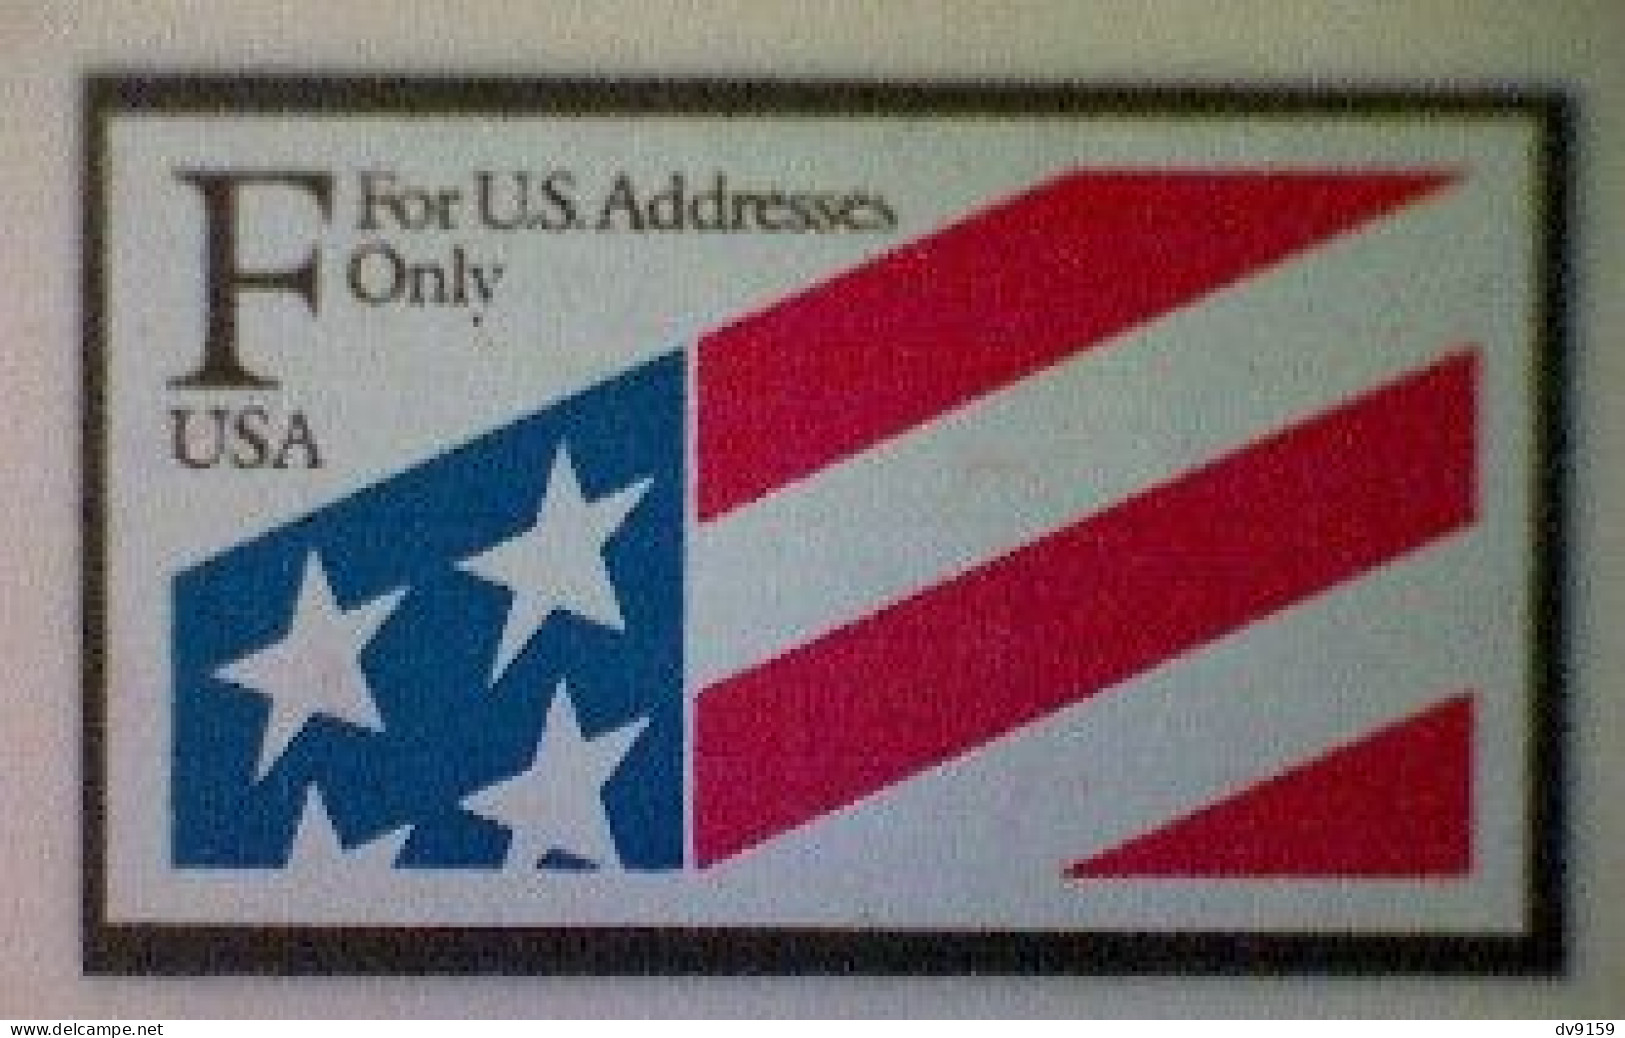 United States, Scott #2522, Used(o), 1991, Flag, (29¢), Red, White, And Blue - Gebruikt